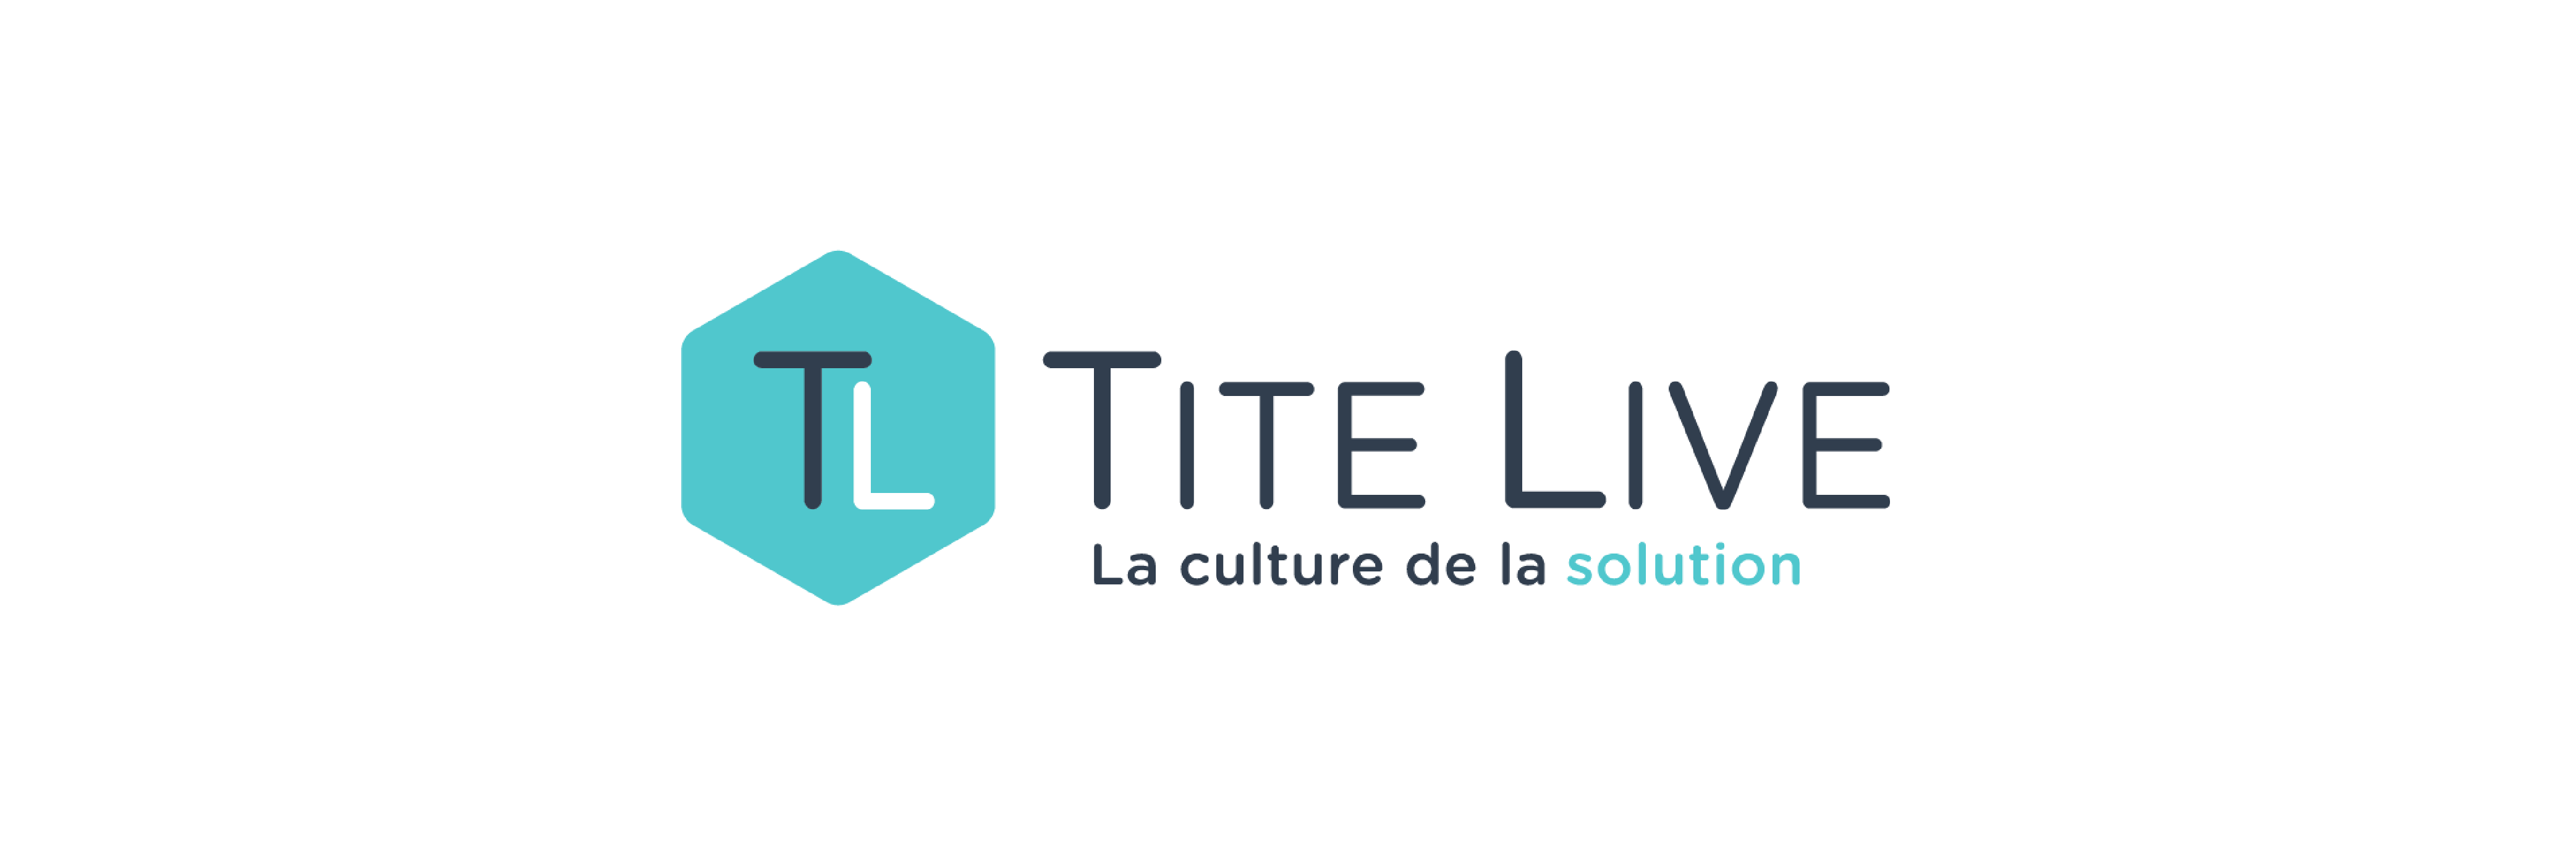 partner-logos_tite live